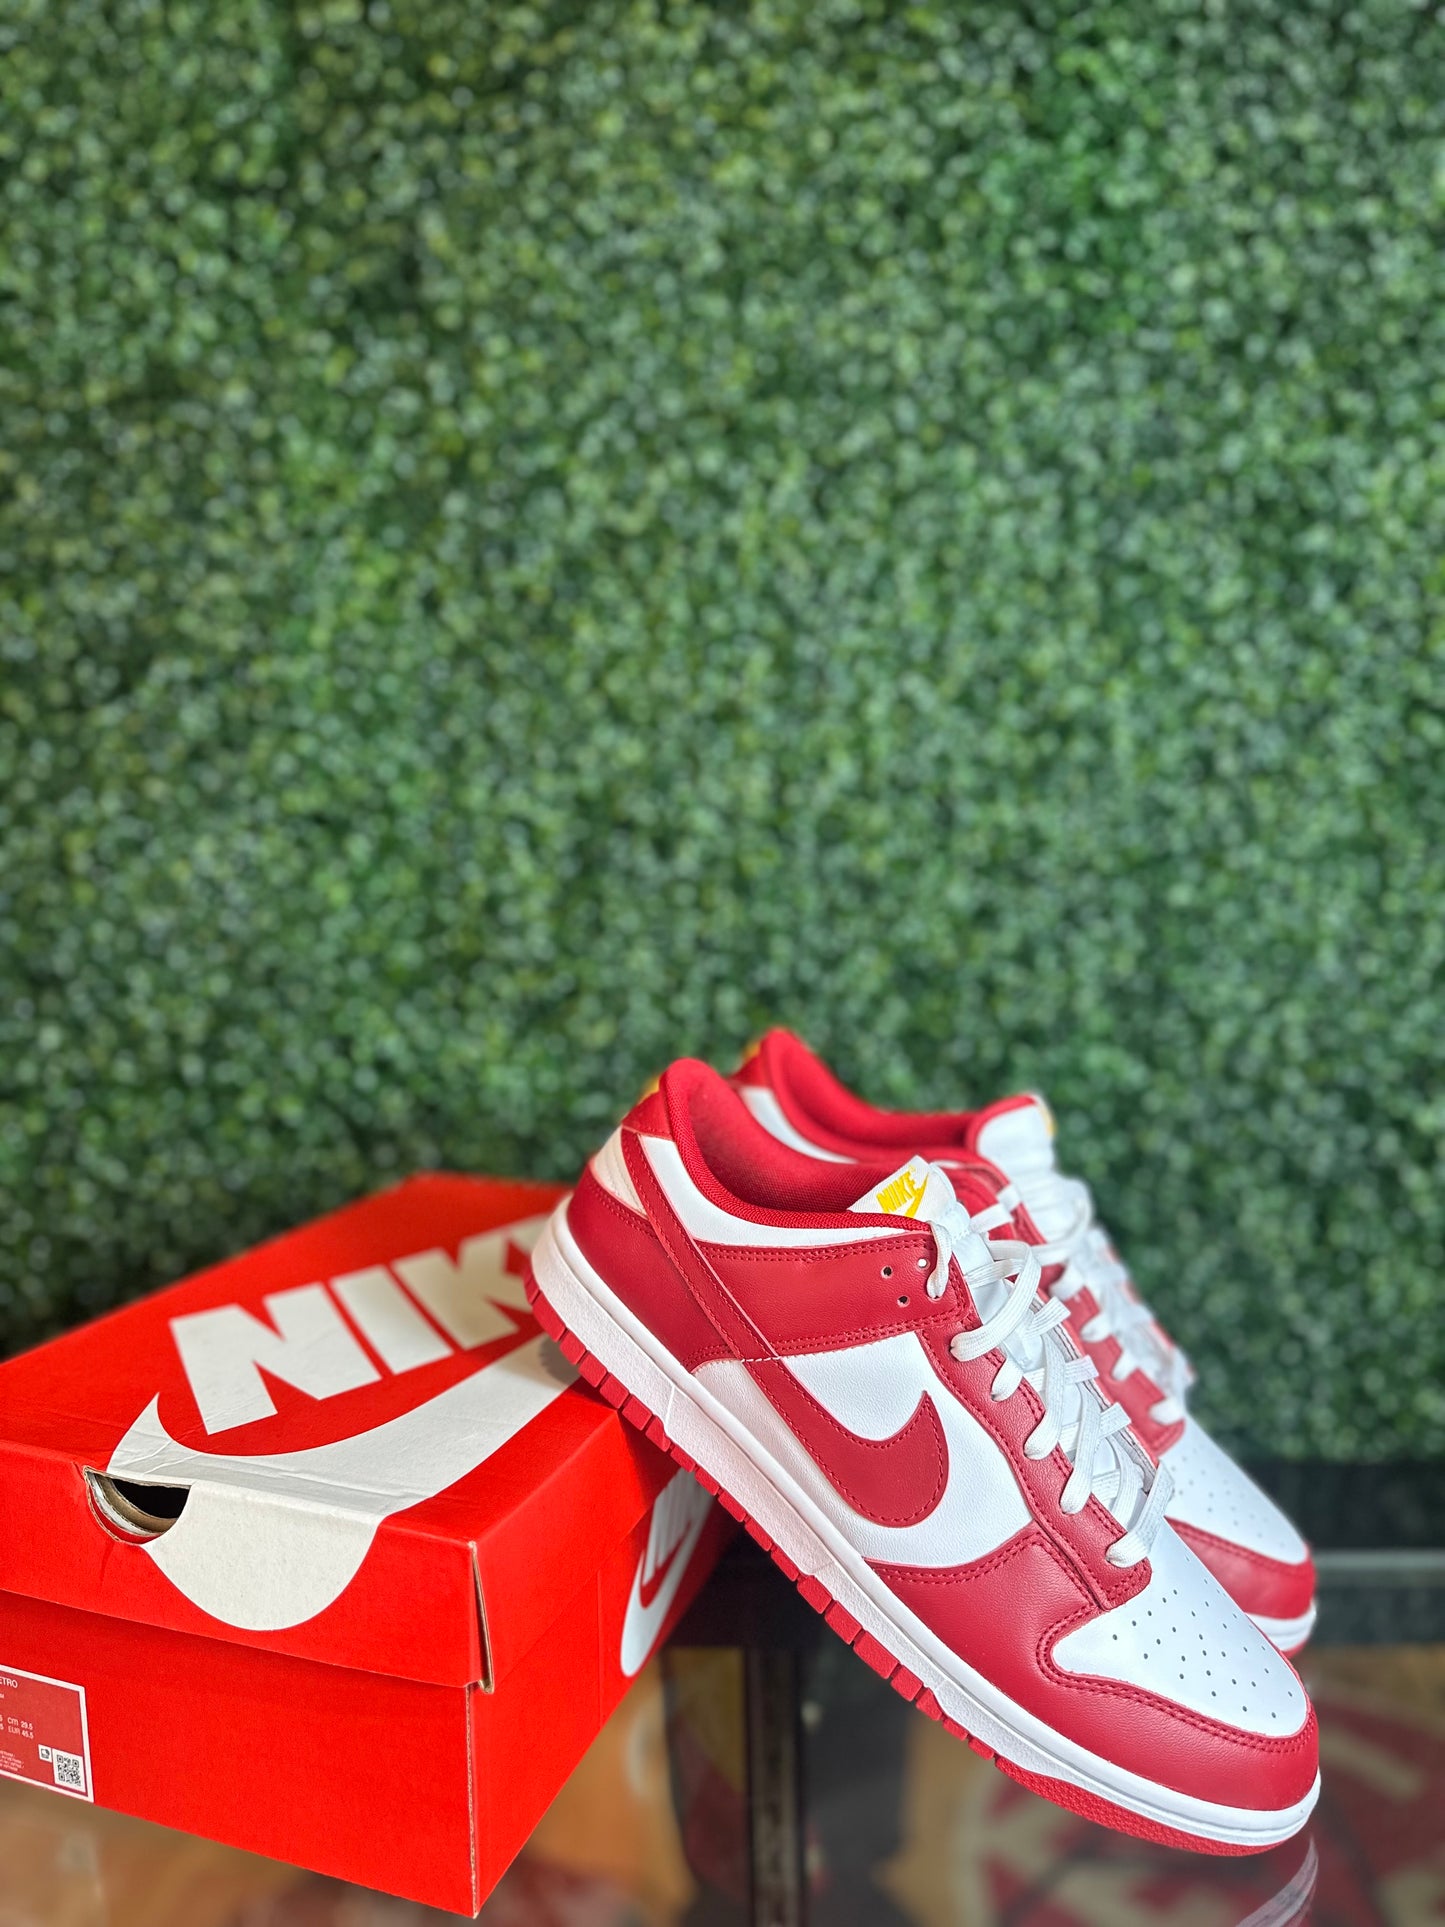 Nike Dunk Low “Gym Red” Size 11.5 DS OG